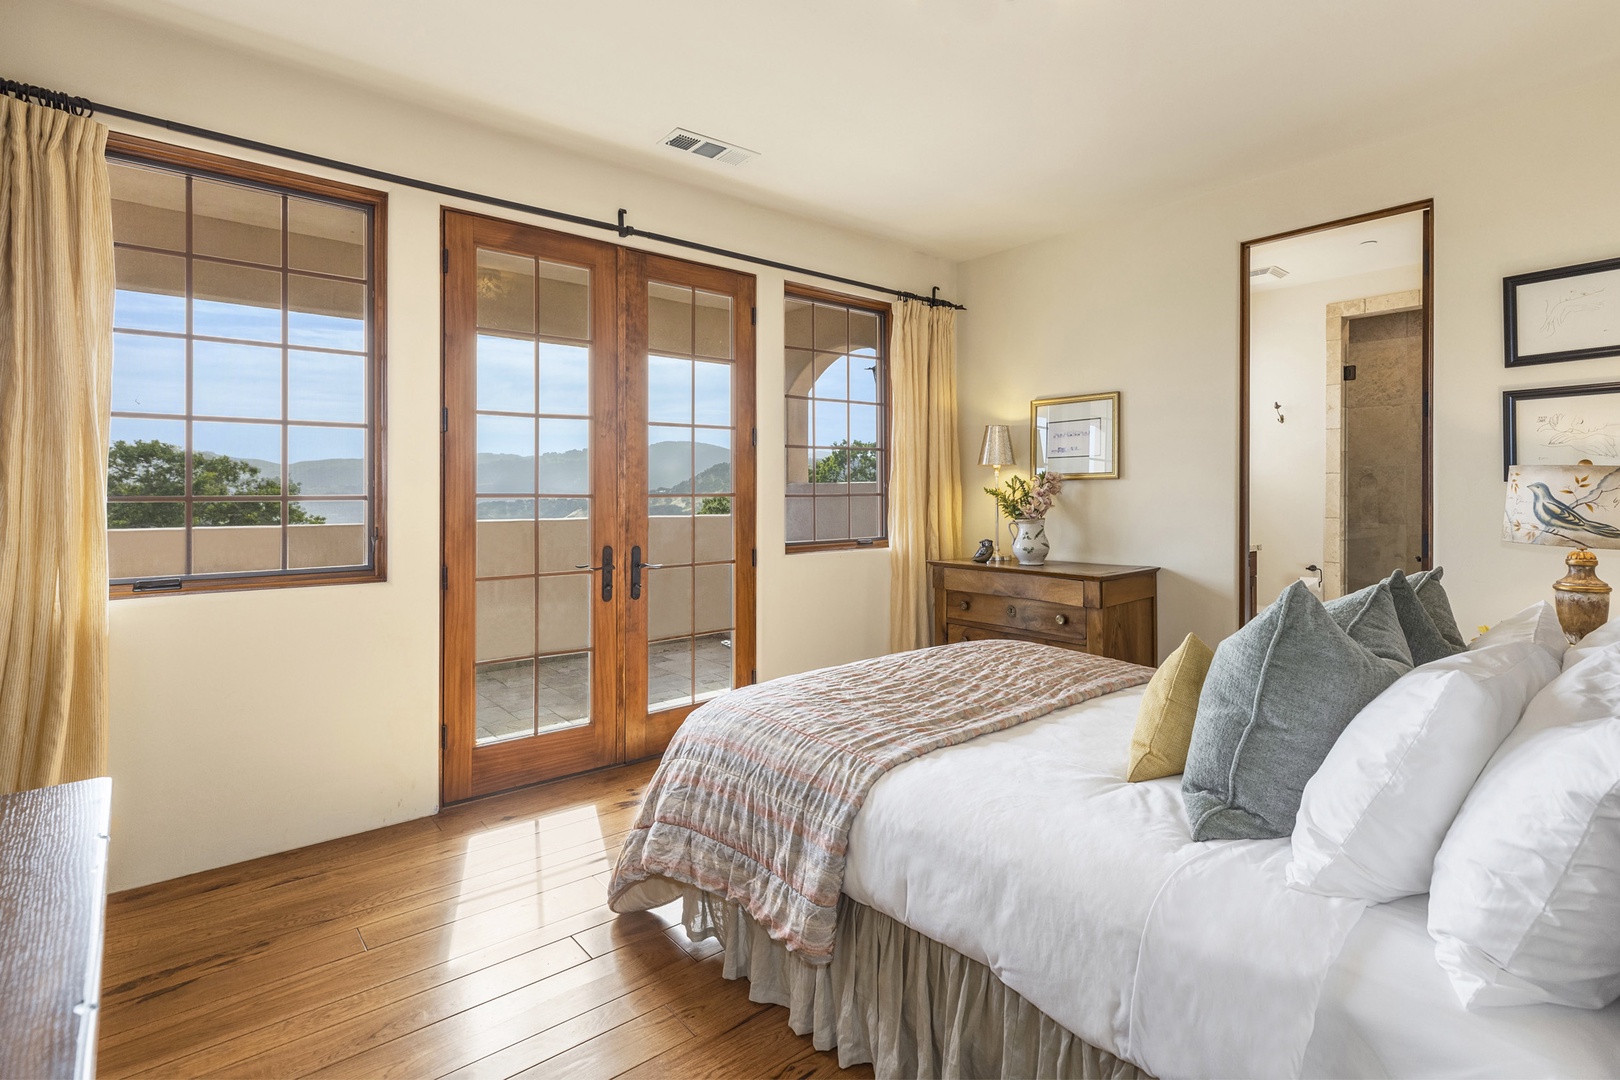 Fairfield Vacation Rentals, Villa Capricho - Guest bedroom with queen bed